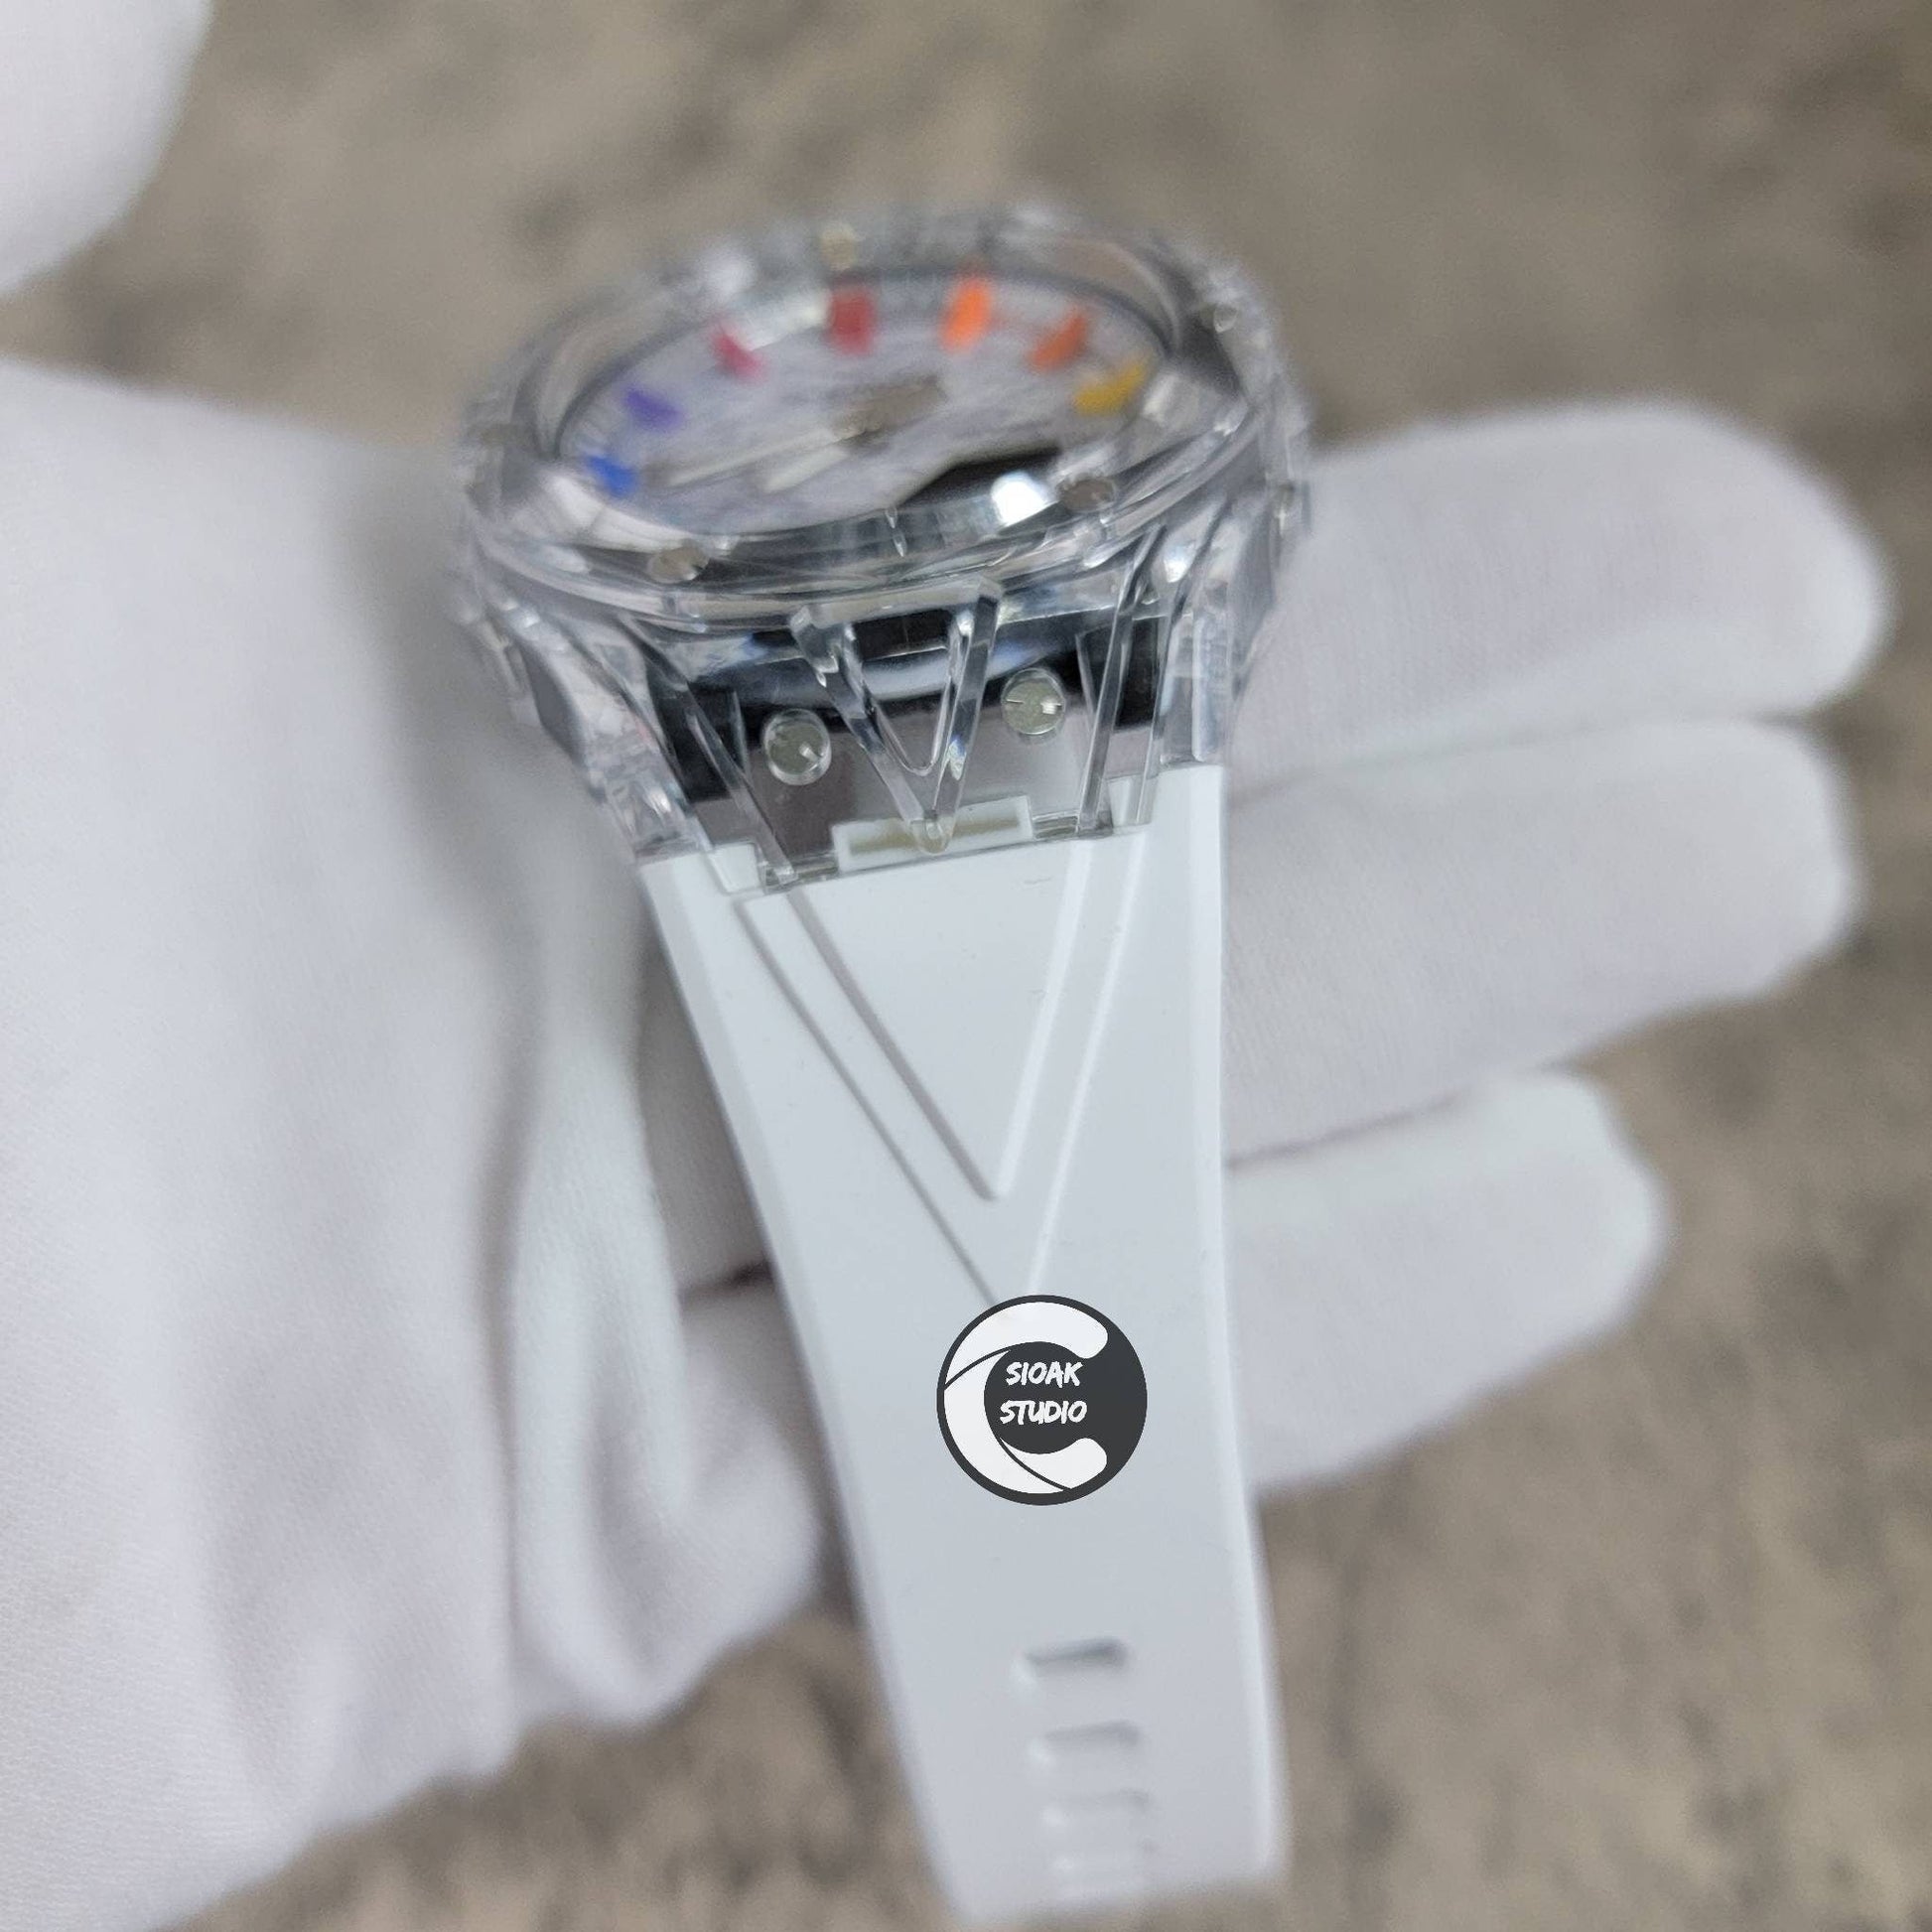 Casioak Mod Watch Transparent Case White Strap Silver Rainbow Time Mark Meteorite Dial 44mm - Casioak Studio